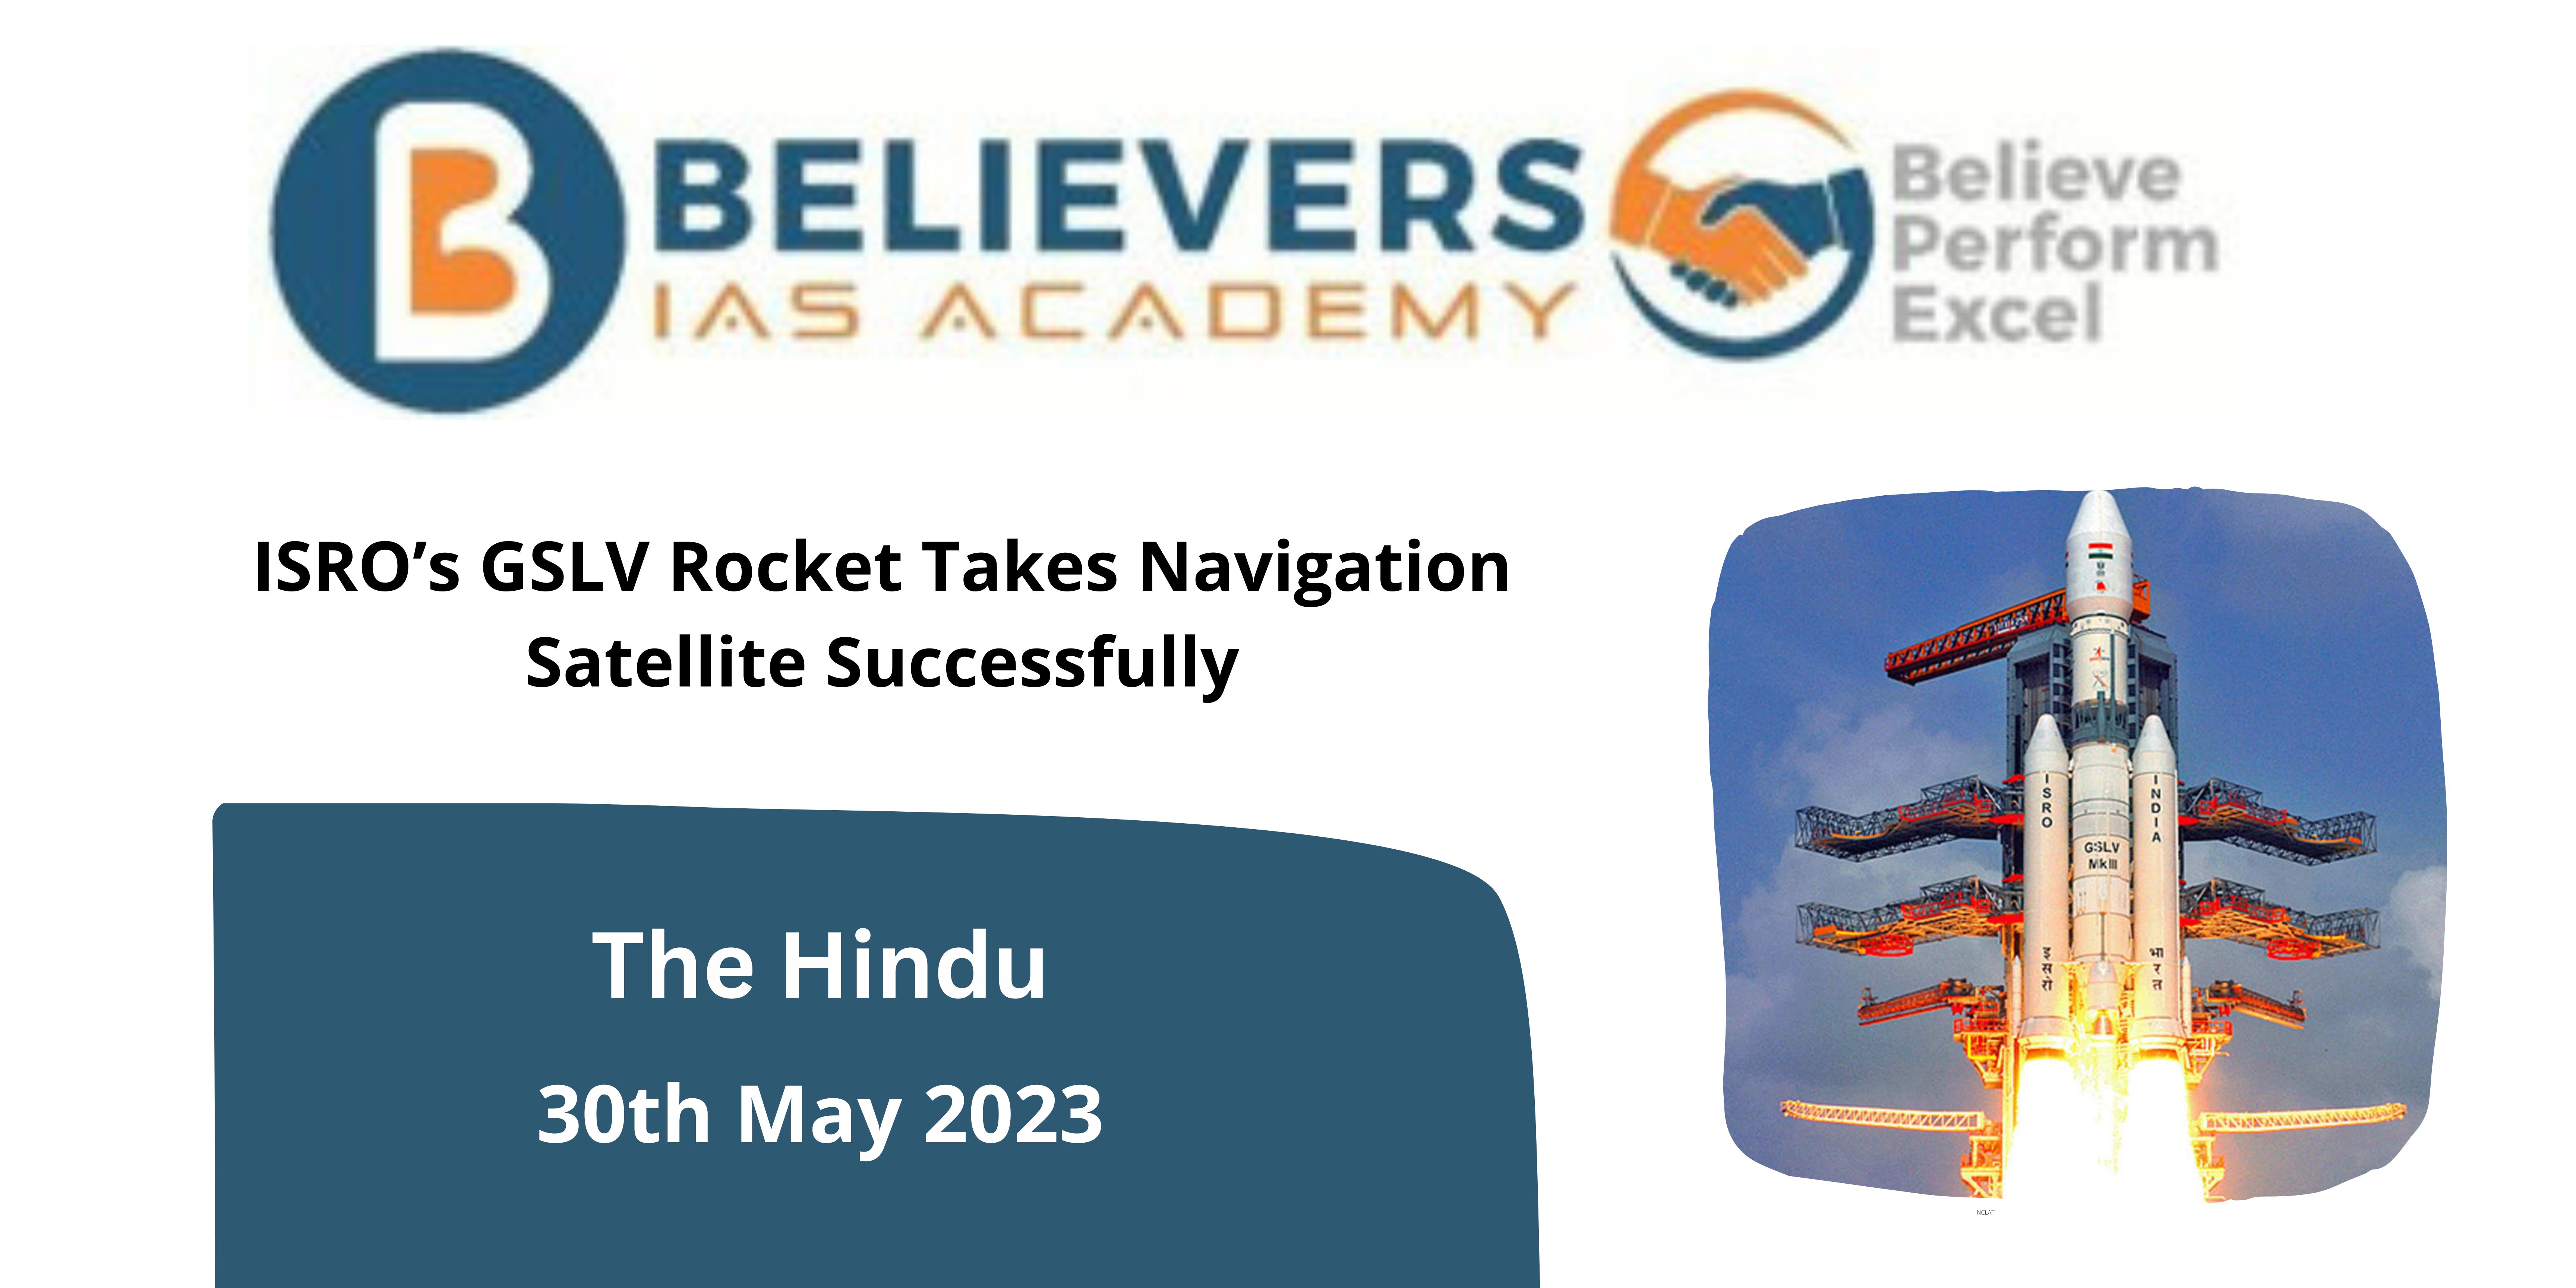 ISRO’s GSLV Rocket Takes Navigation Satellite Successfully